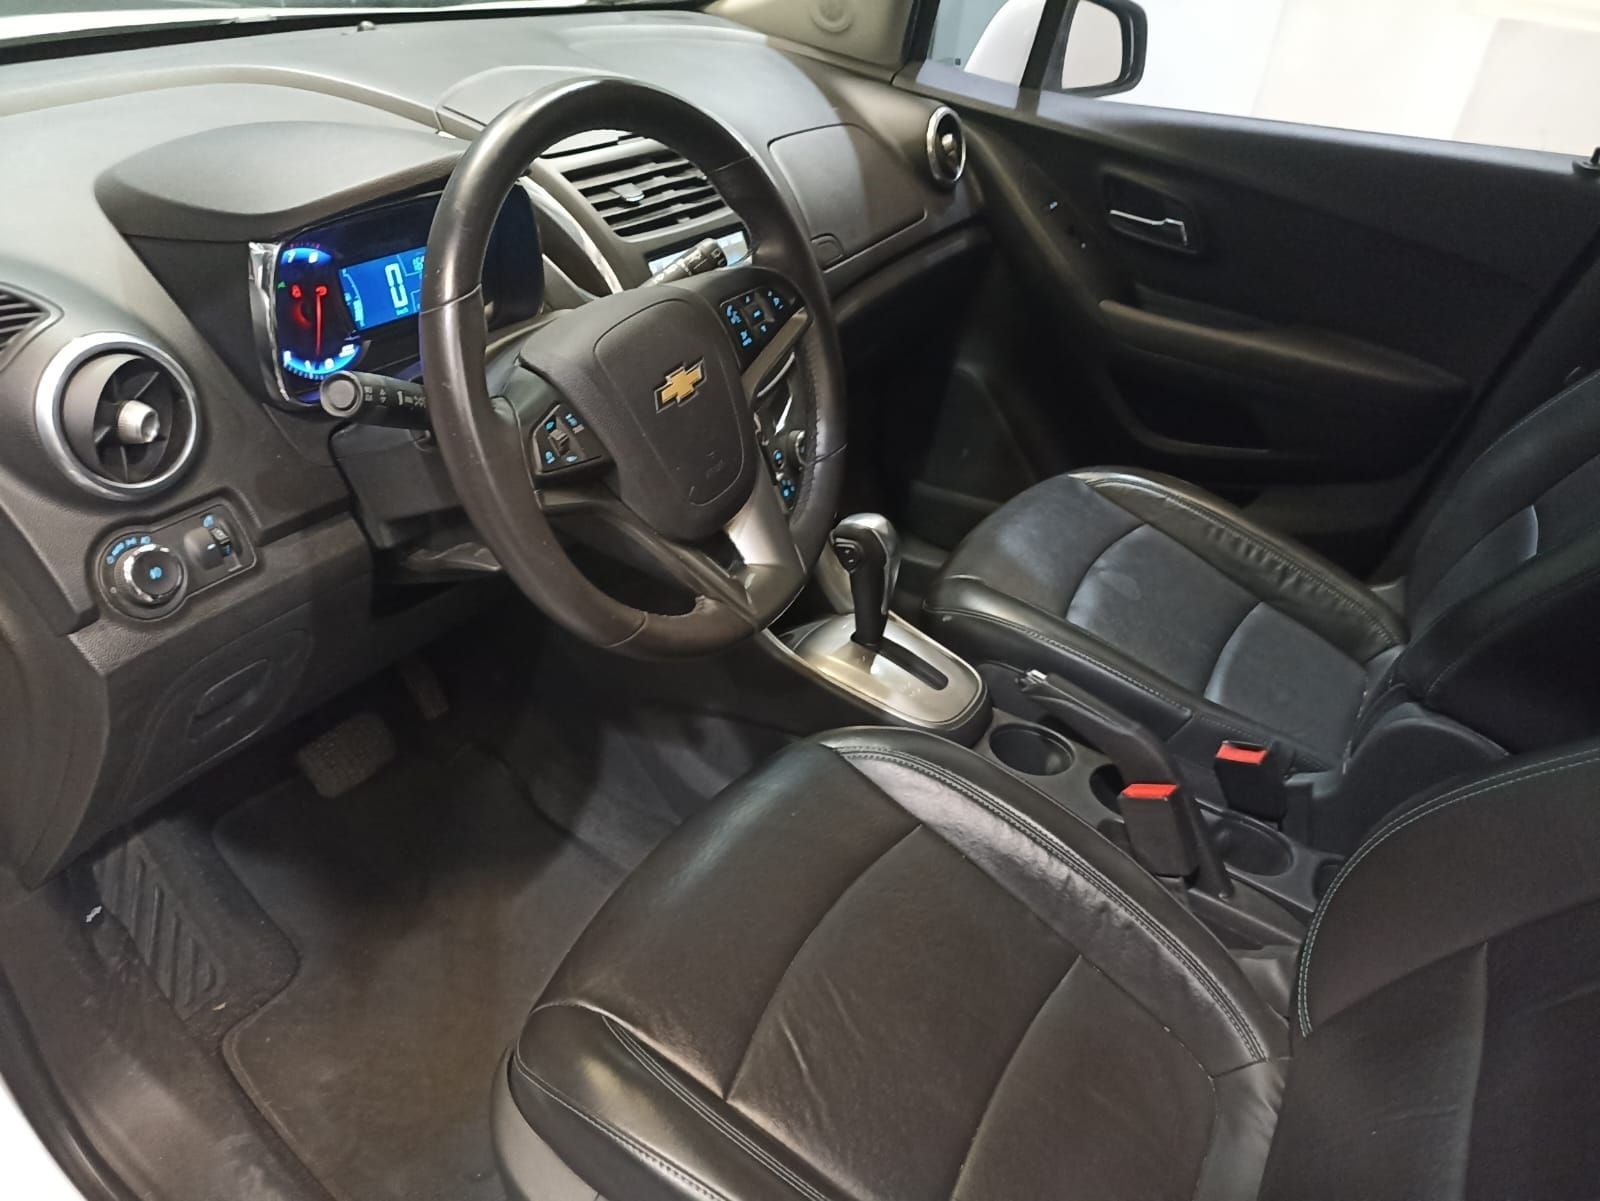 2014 Chevrolet Trax 1.8 LTZ Piel At